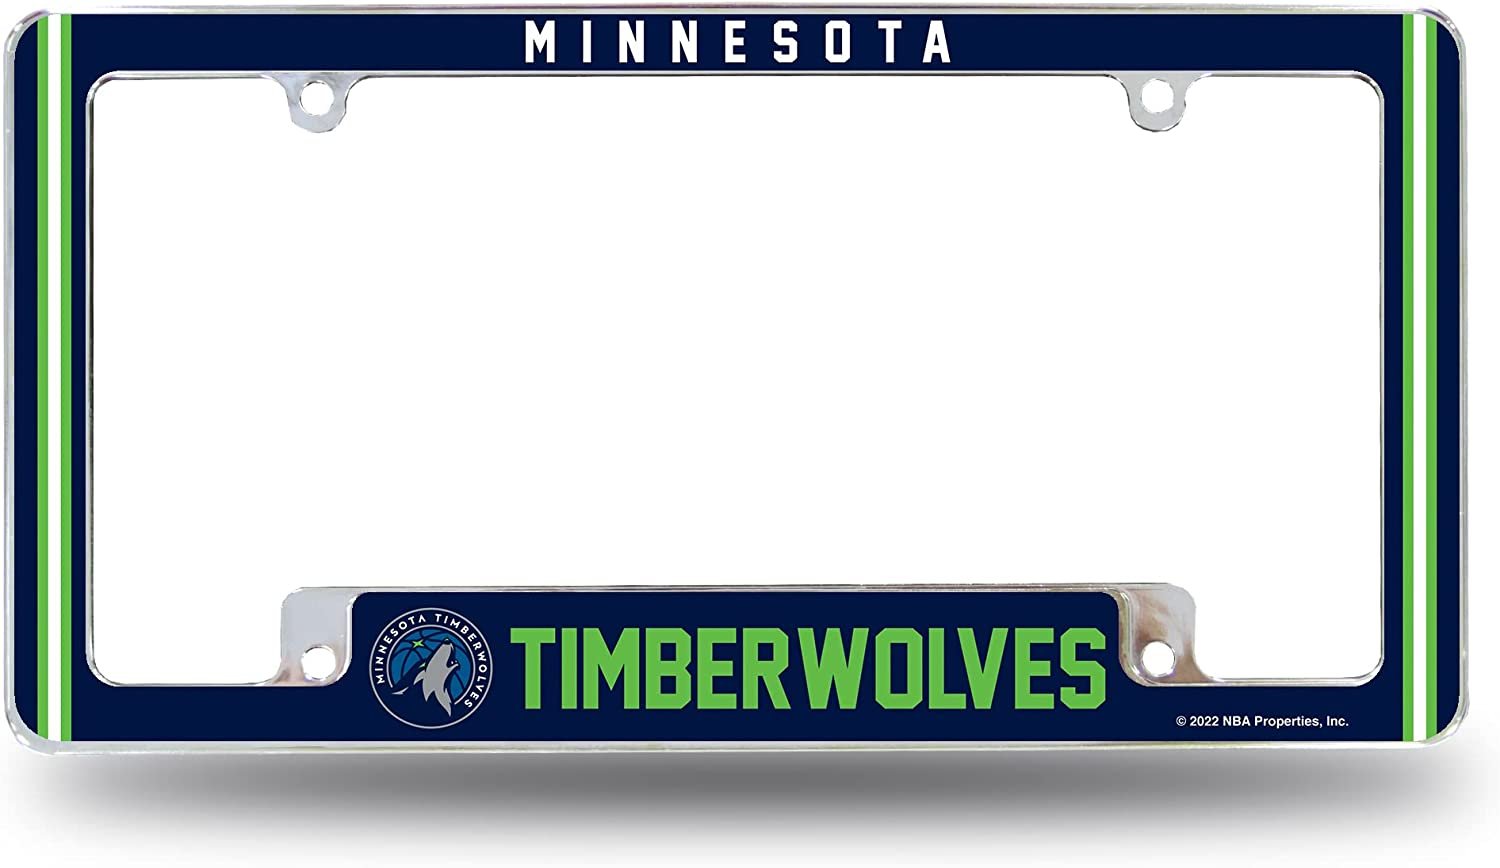 Minnesota Timberwolves Metal License Plate Frame Chrome Tag Cover Alternate Design 6x12 Inch